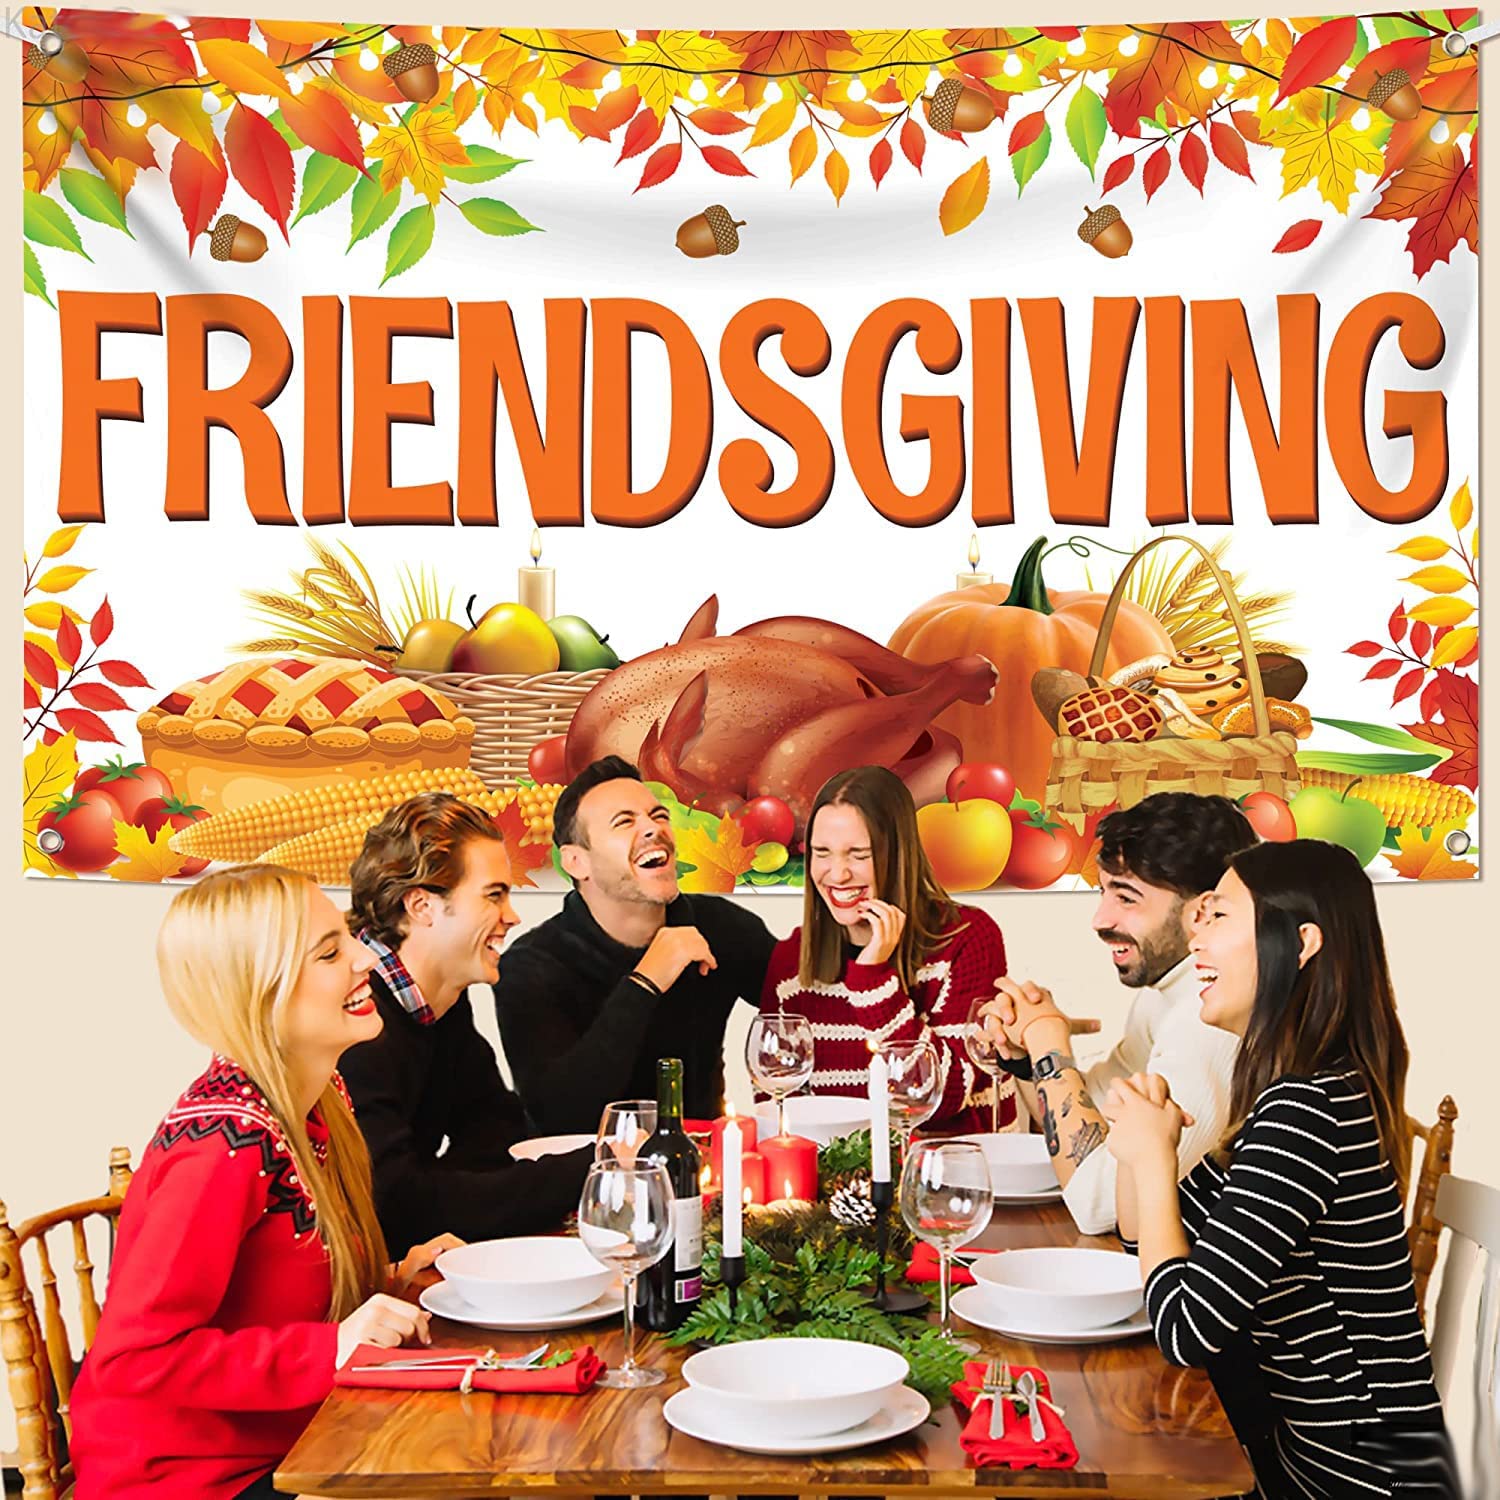 Friendsgiving" Thanksgiving banner"